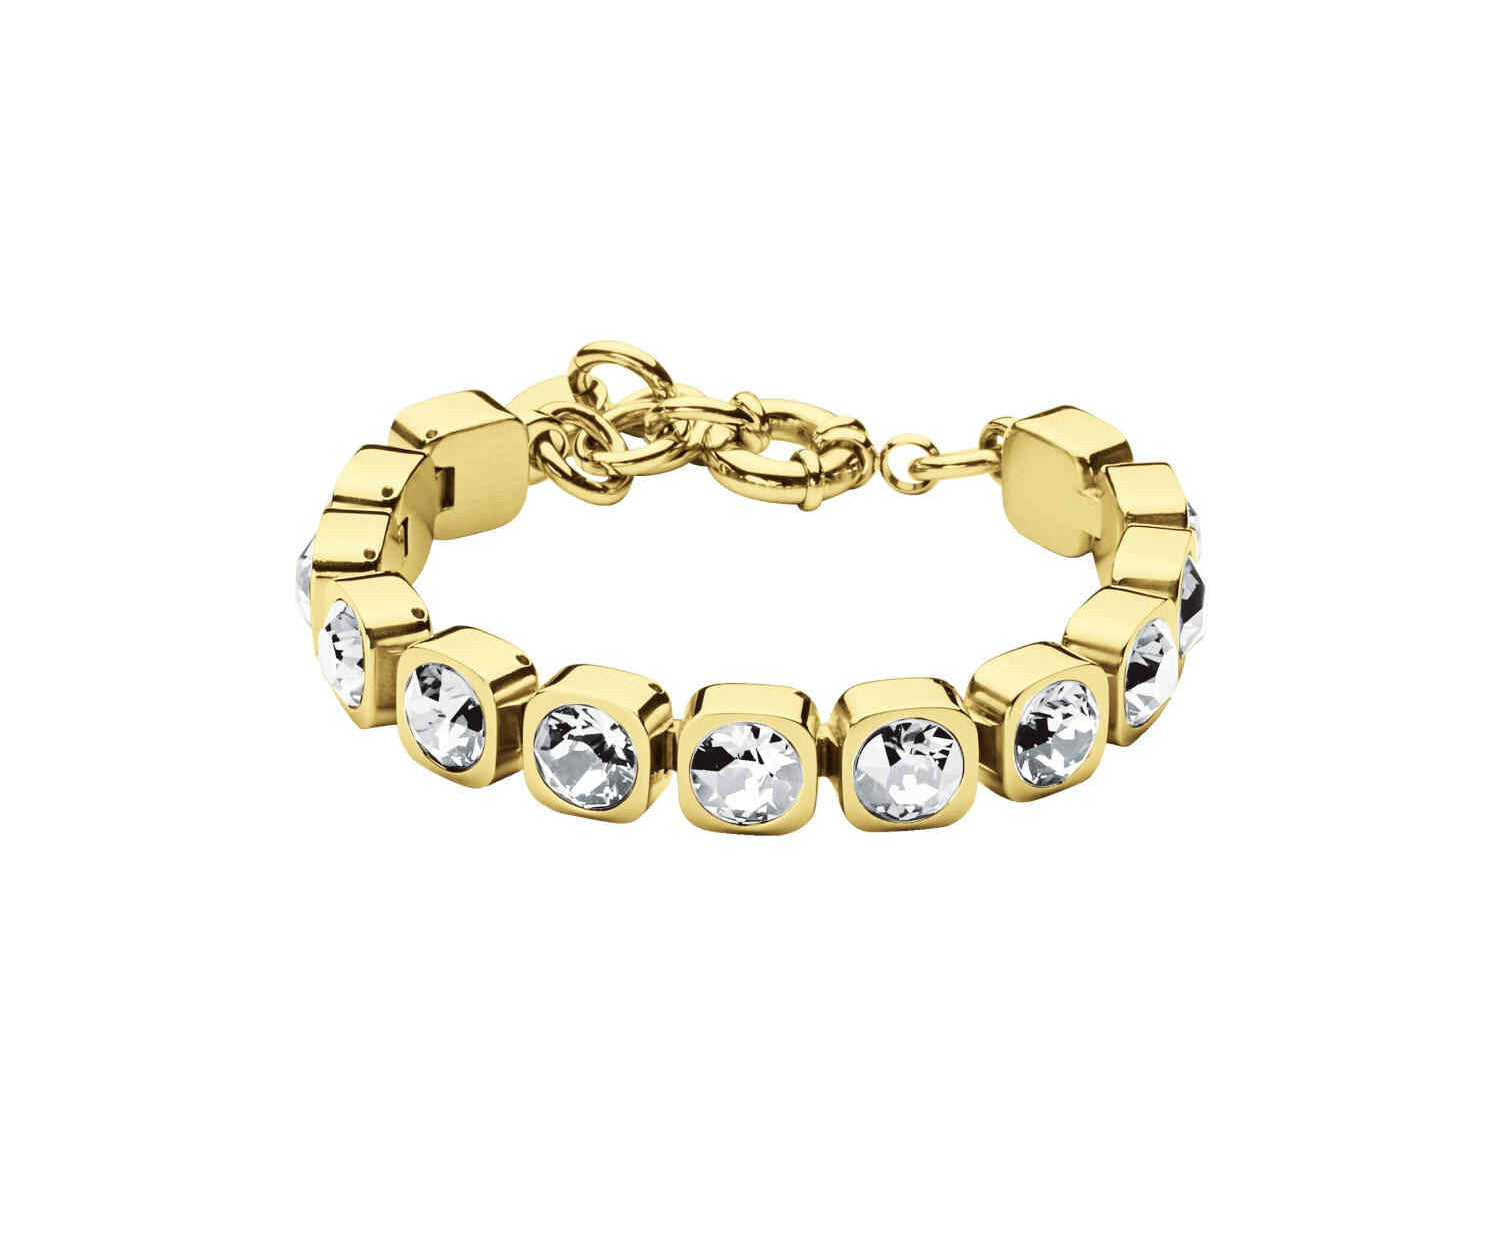 Conian armband gold/crystal